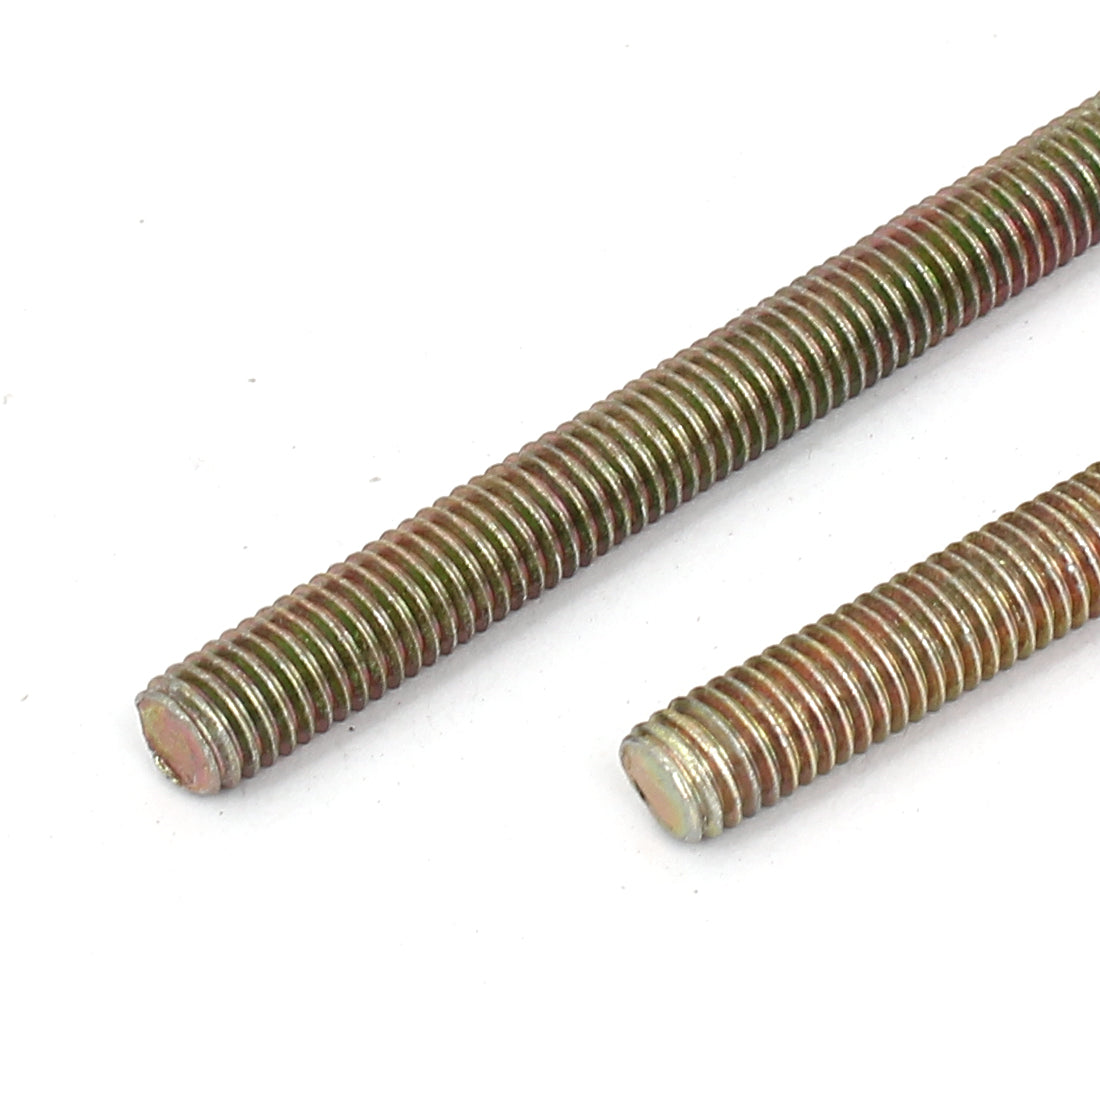 uxcell Uxcell 1.25mm Pitch M8 x 110mm Male Threaded All Thread Rod Bar Stud Bronze Tone 10Pcs